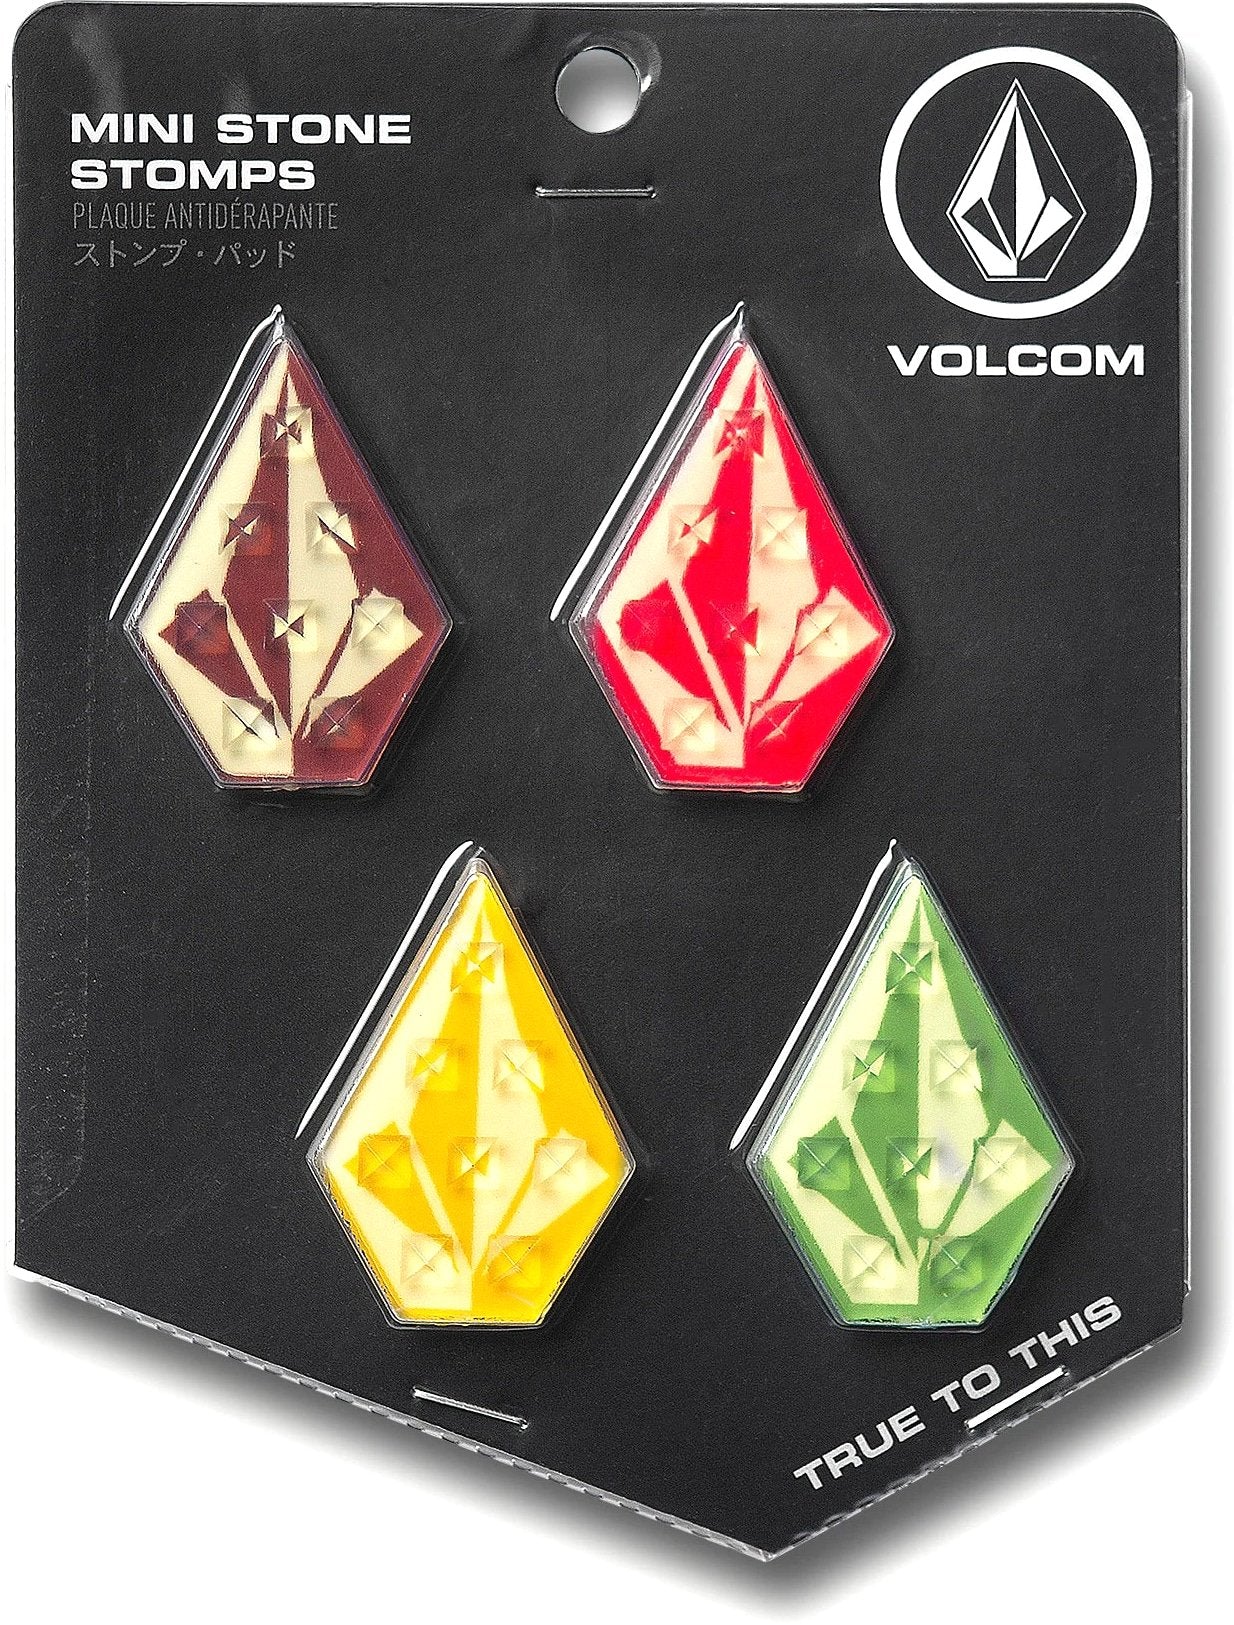 Multi Colored Mini Stone Volcom Stomp Pads